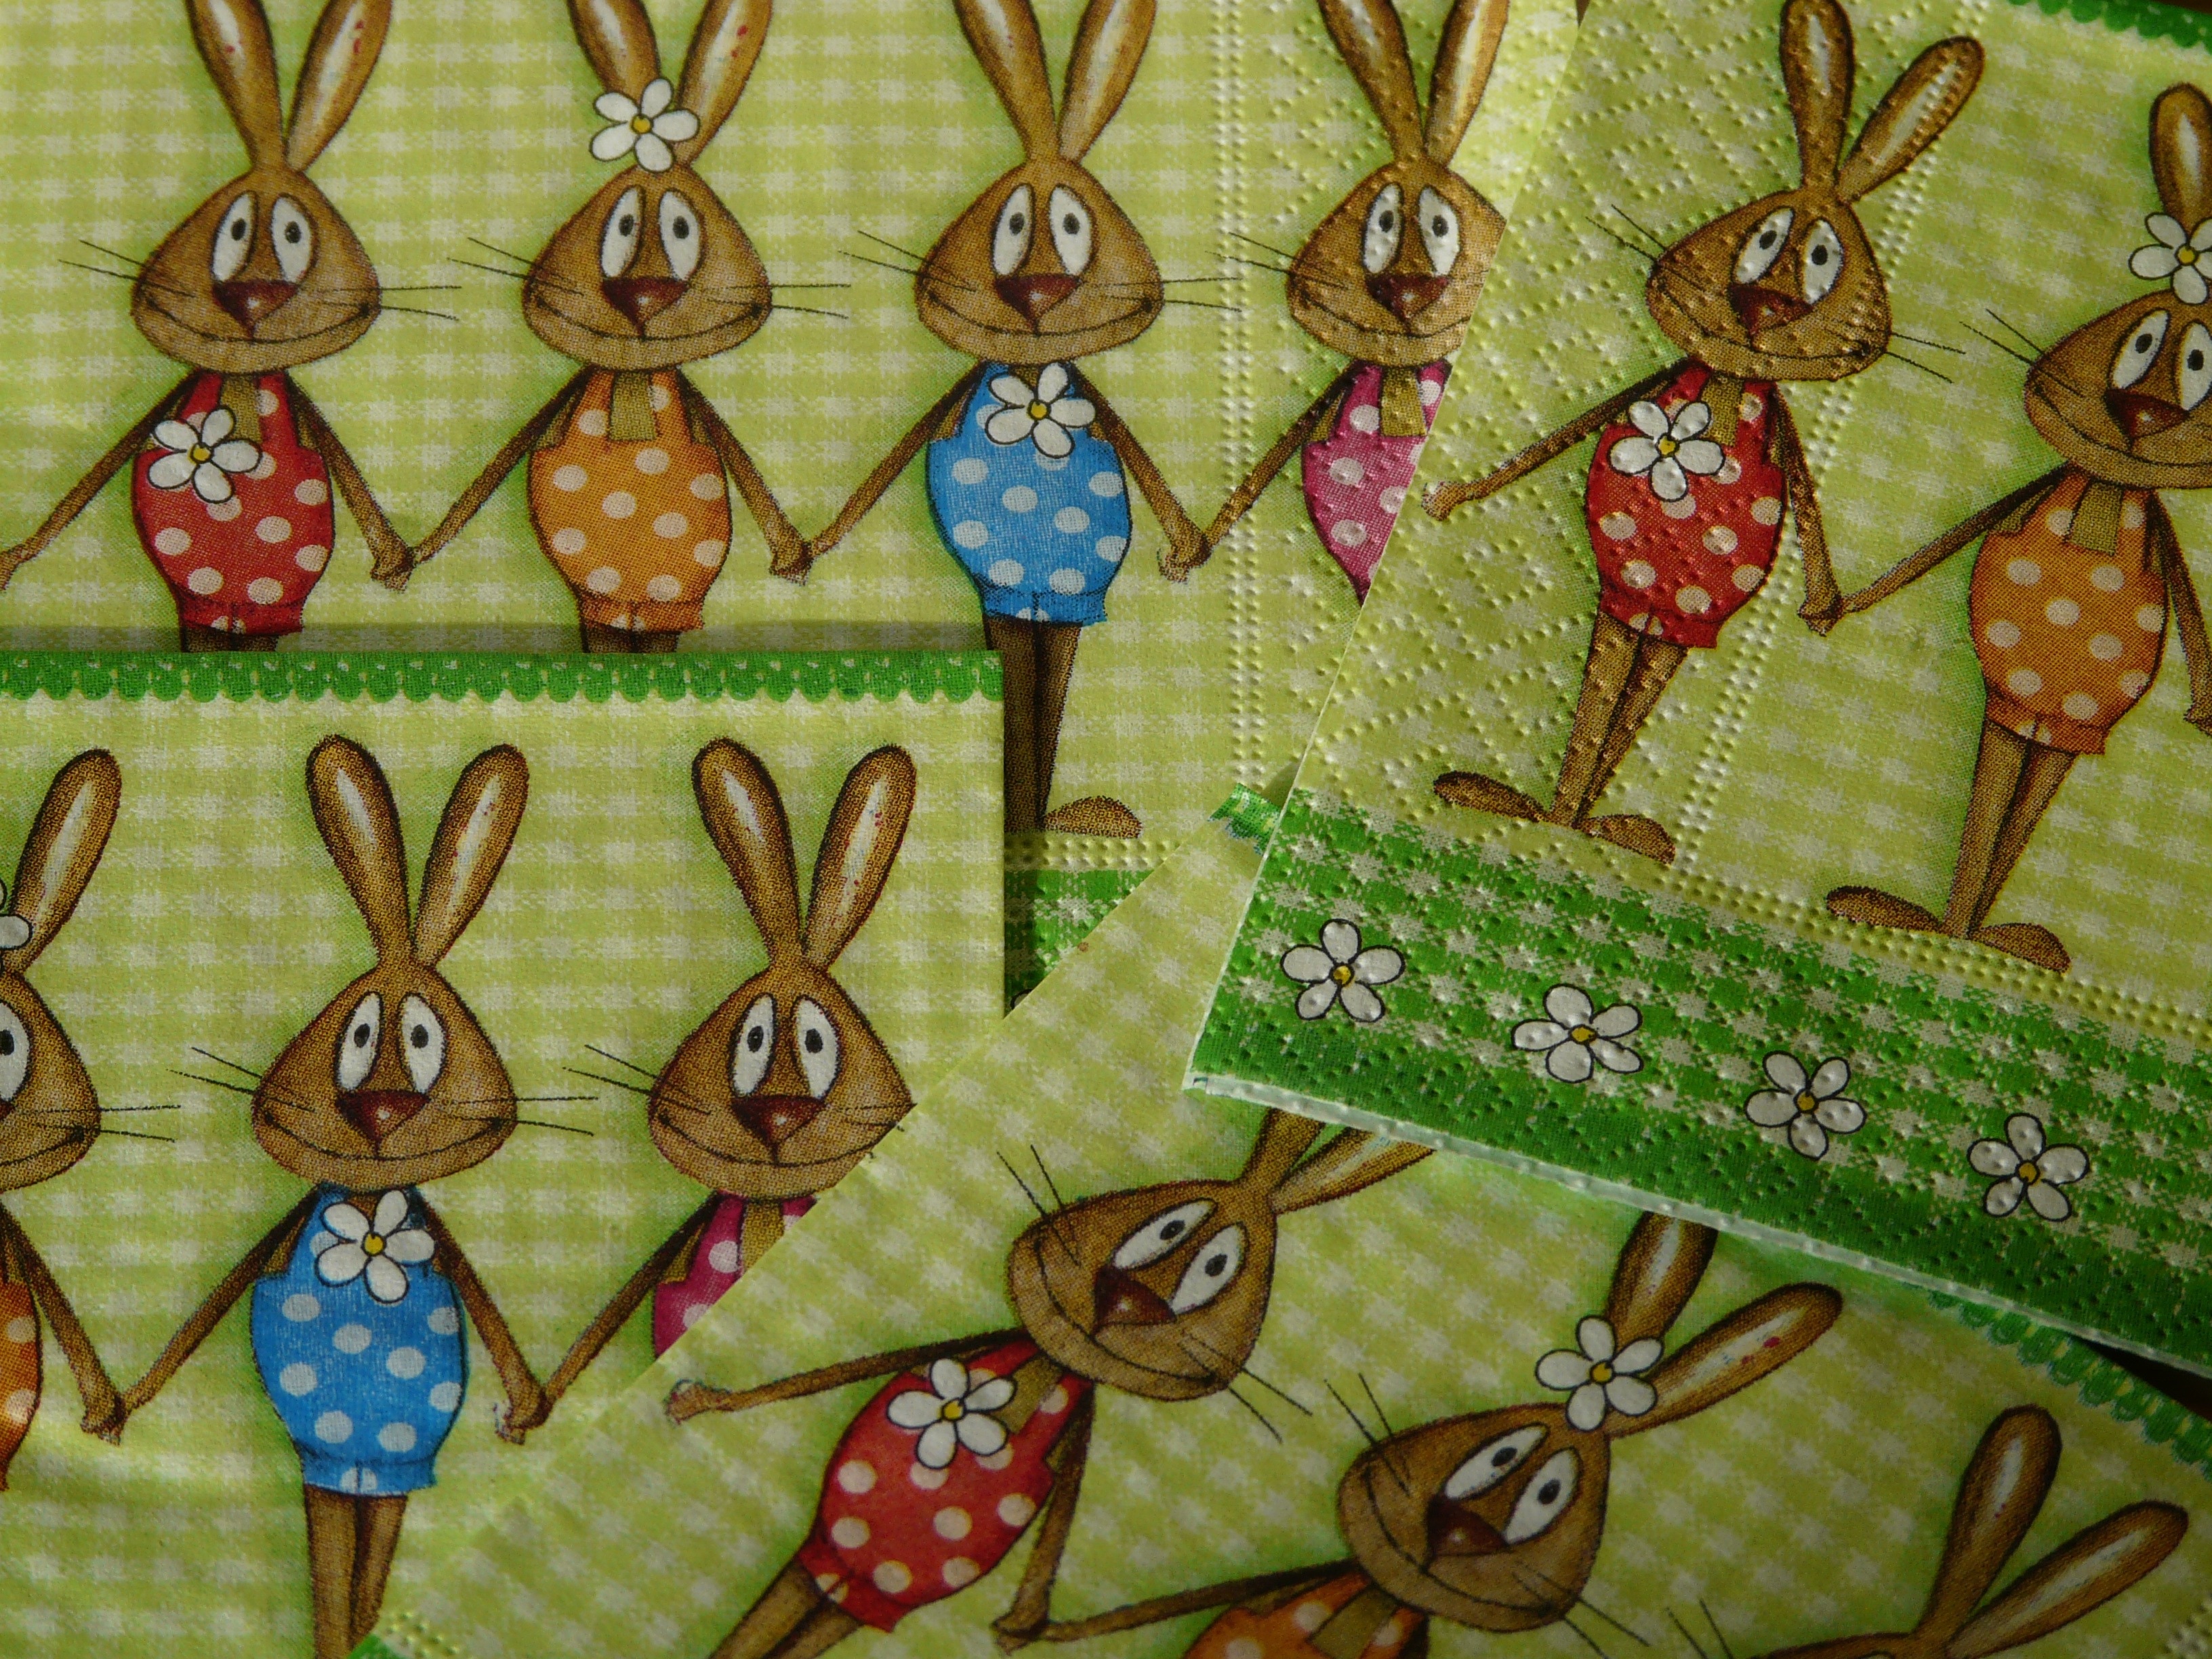 bunny printed textiles